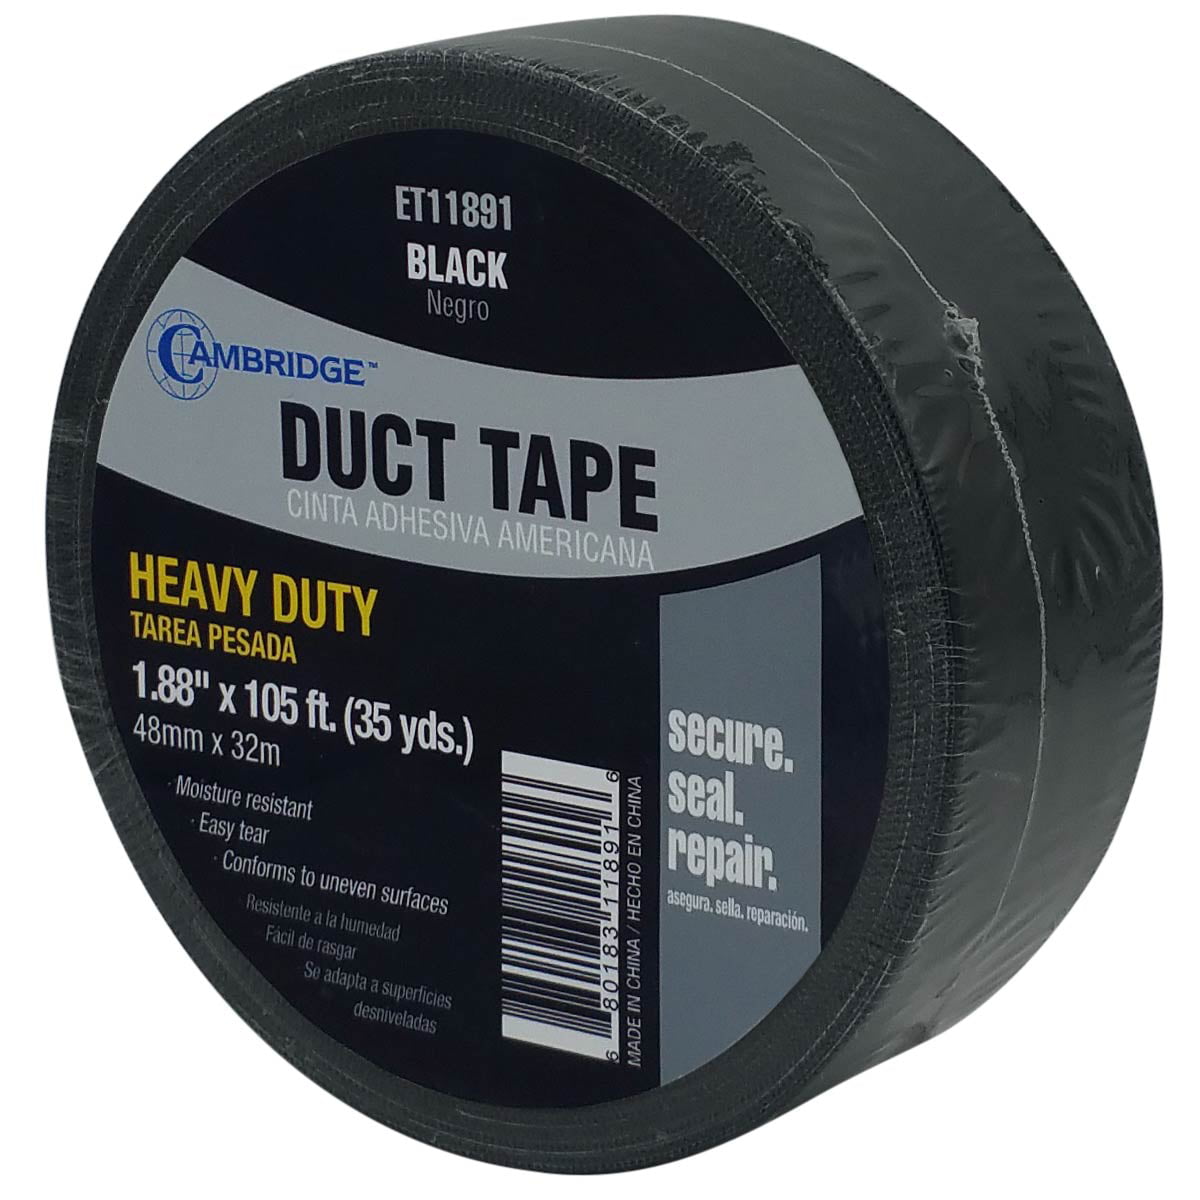 Cambridge Heavy Duty Duct Tape, Black, 1.88 Inch by 35 Yards, 1 Roll ...